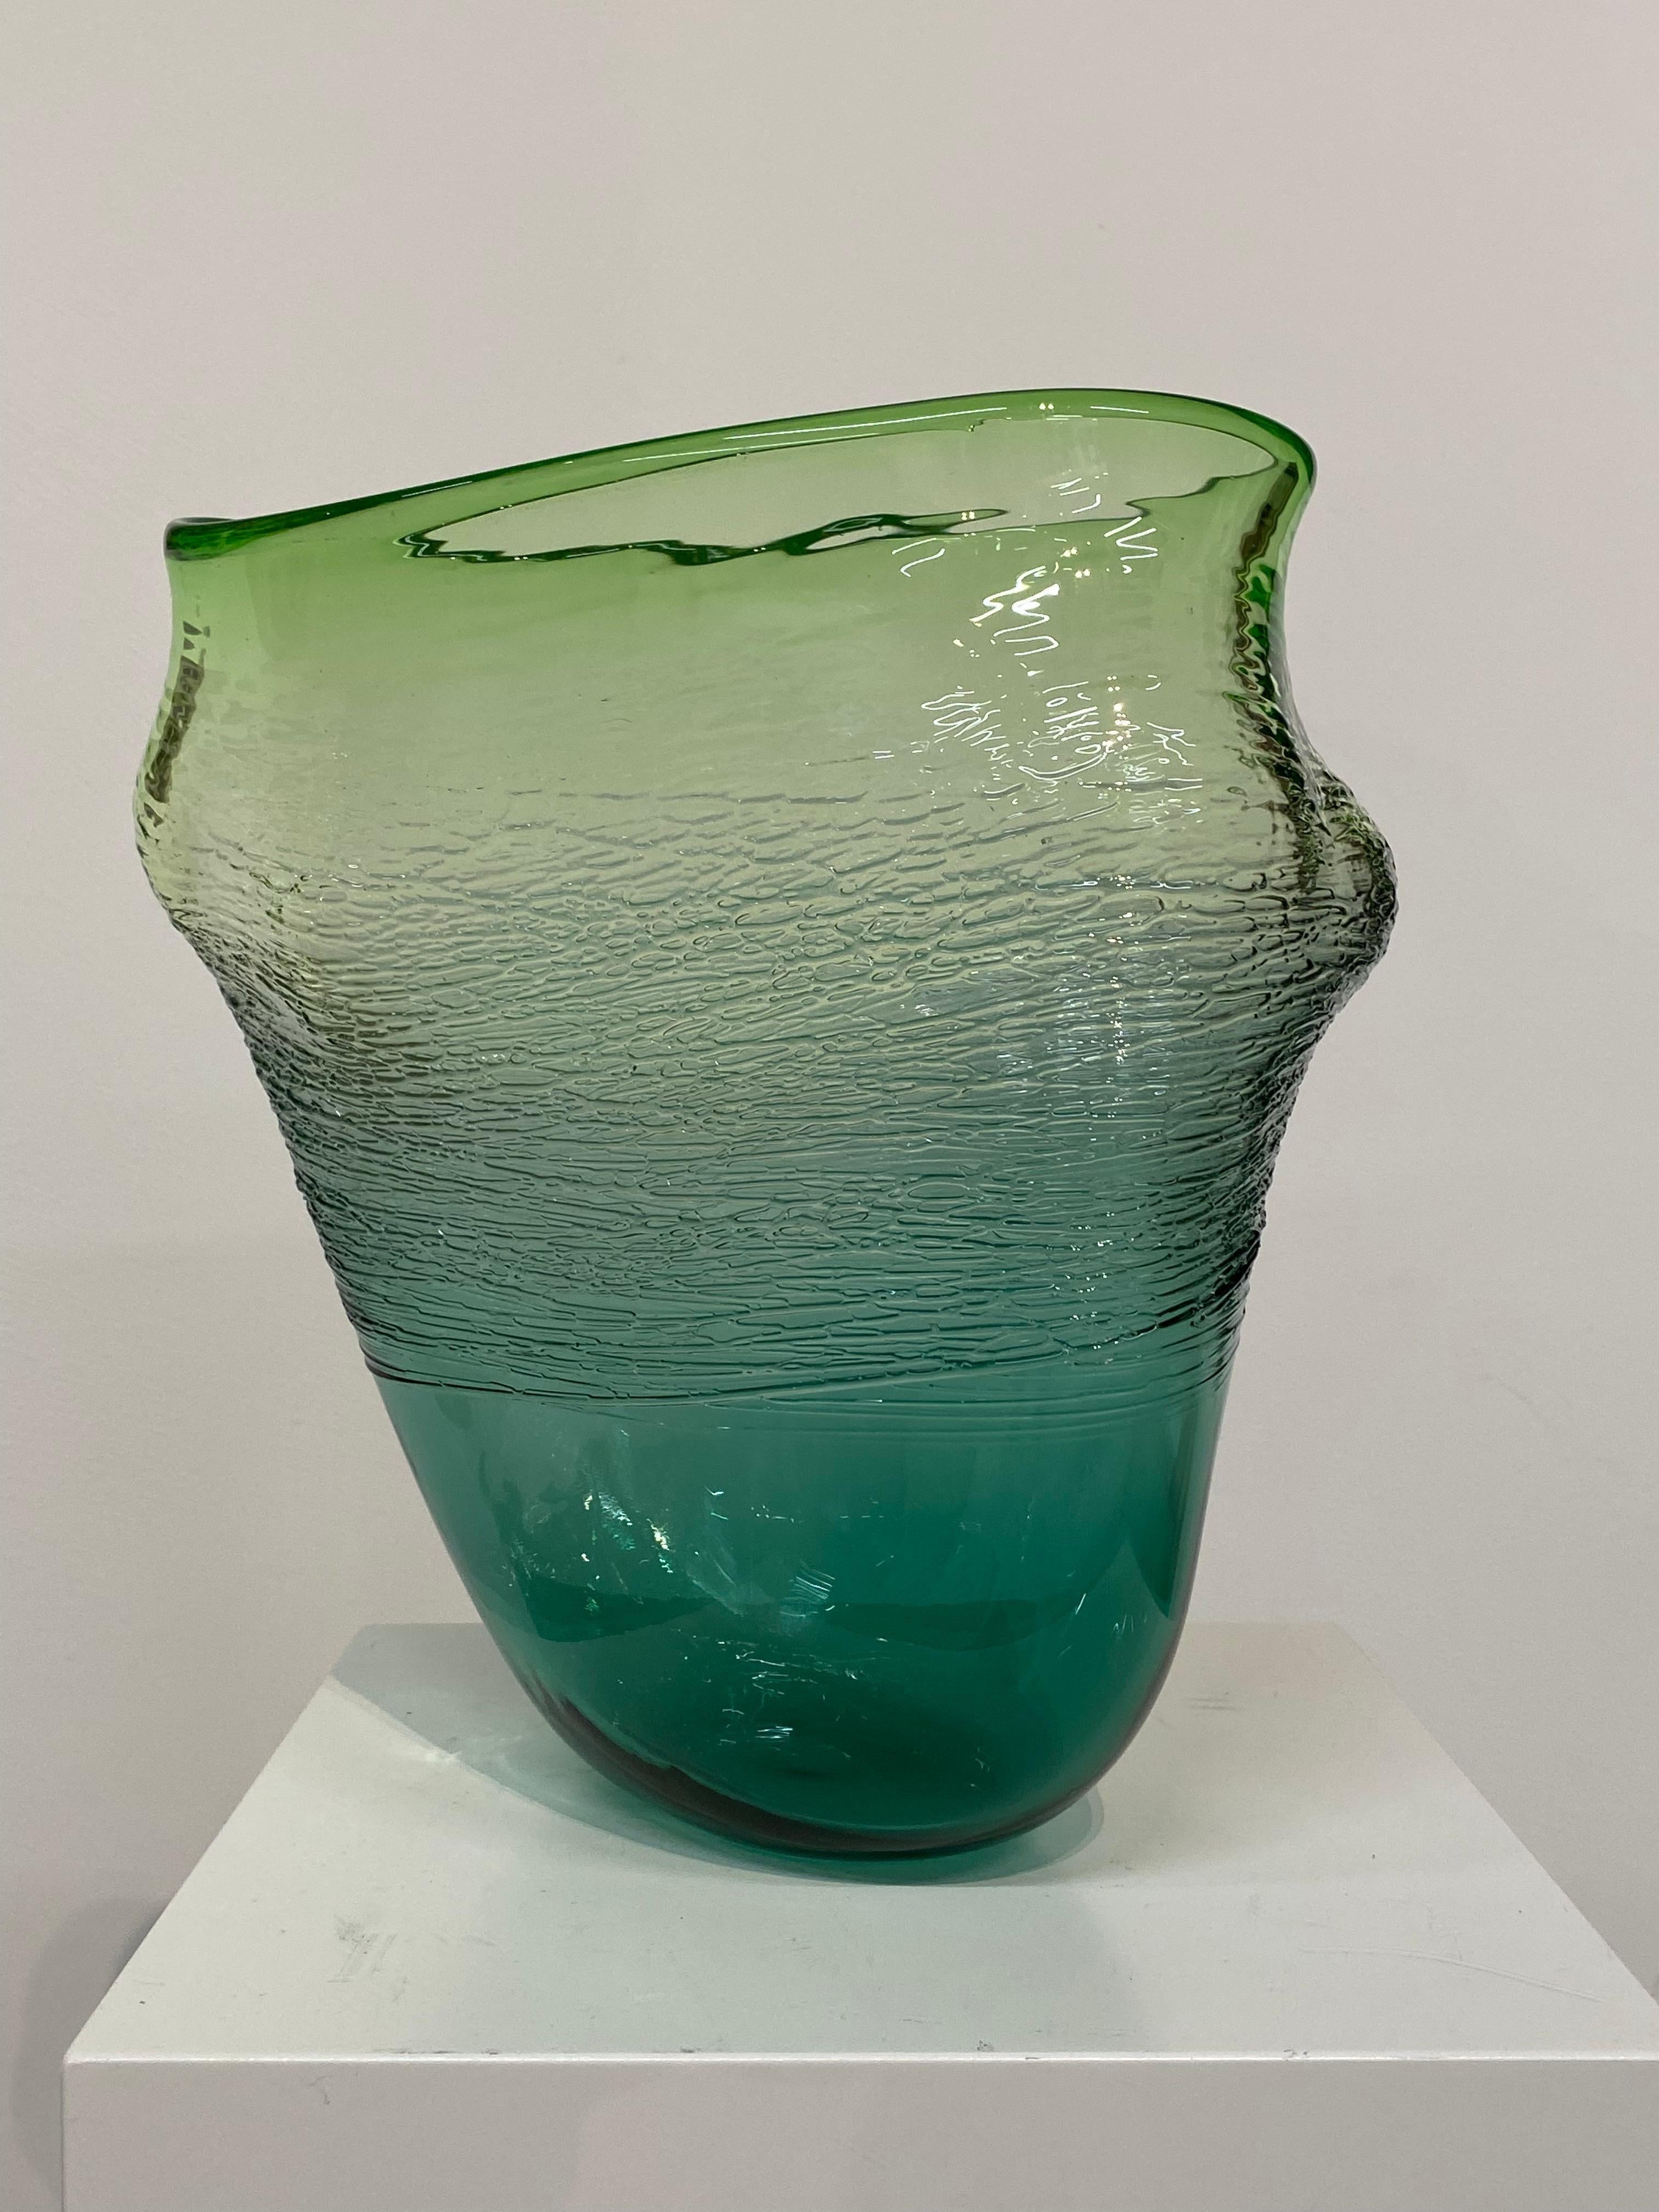 Fluid Form, Green-21st Century Blown Glass Object  - Sculpture by Bibi Smit